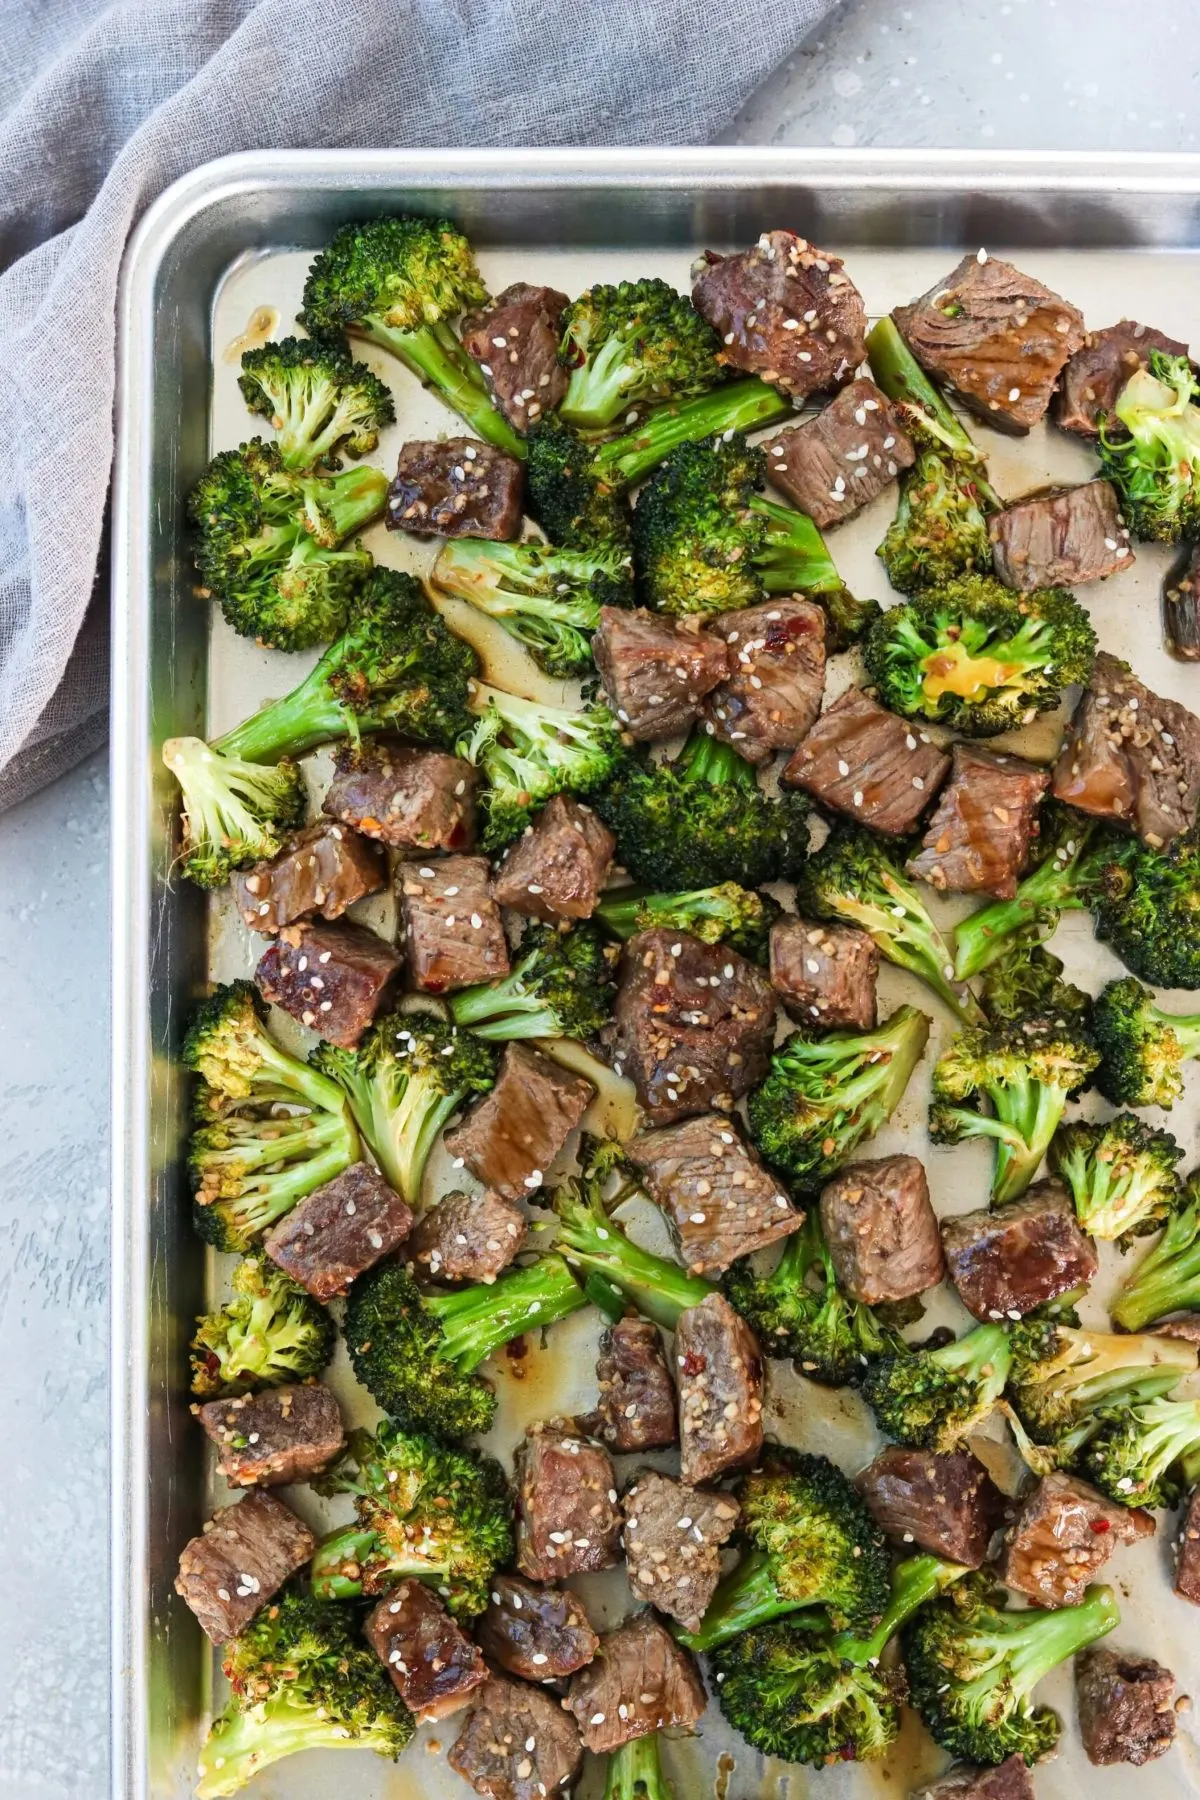 Sheet Pan Beef and Broccoli